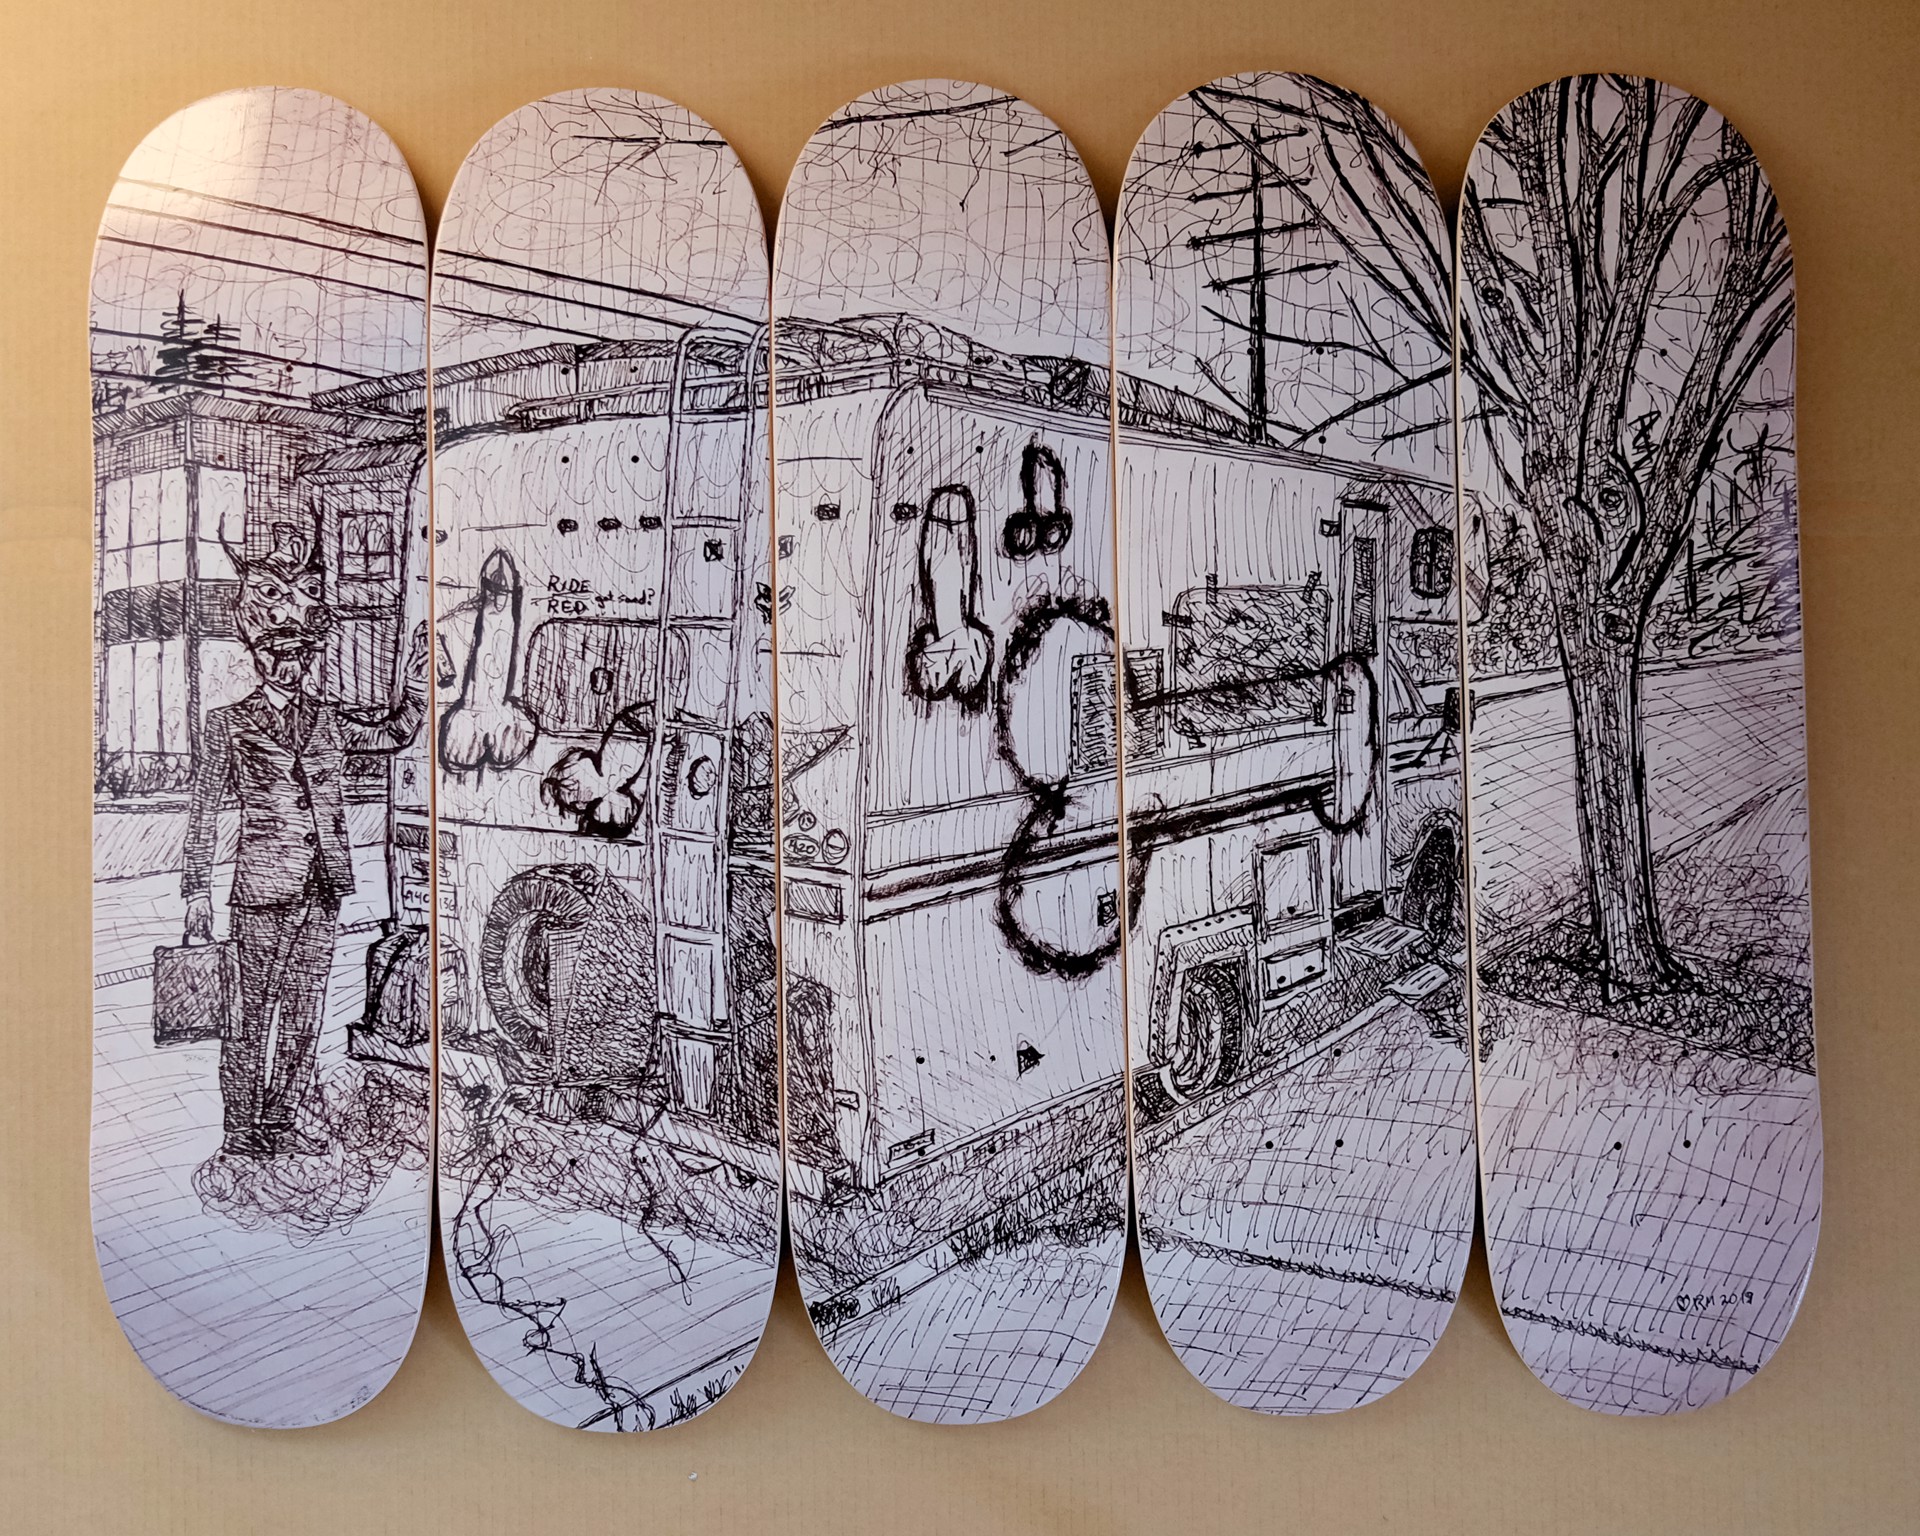 Winnebago, Skateboard Mural by Randy McClelland